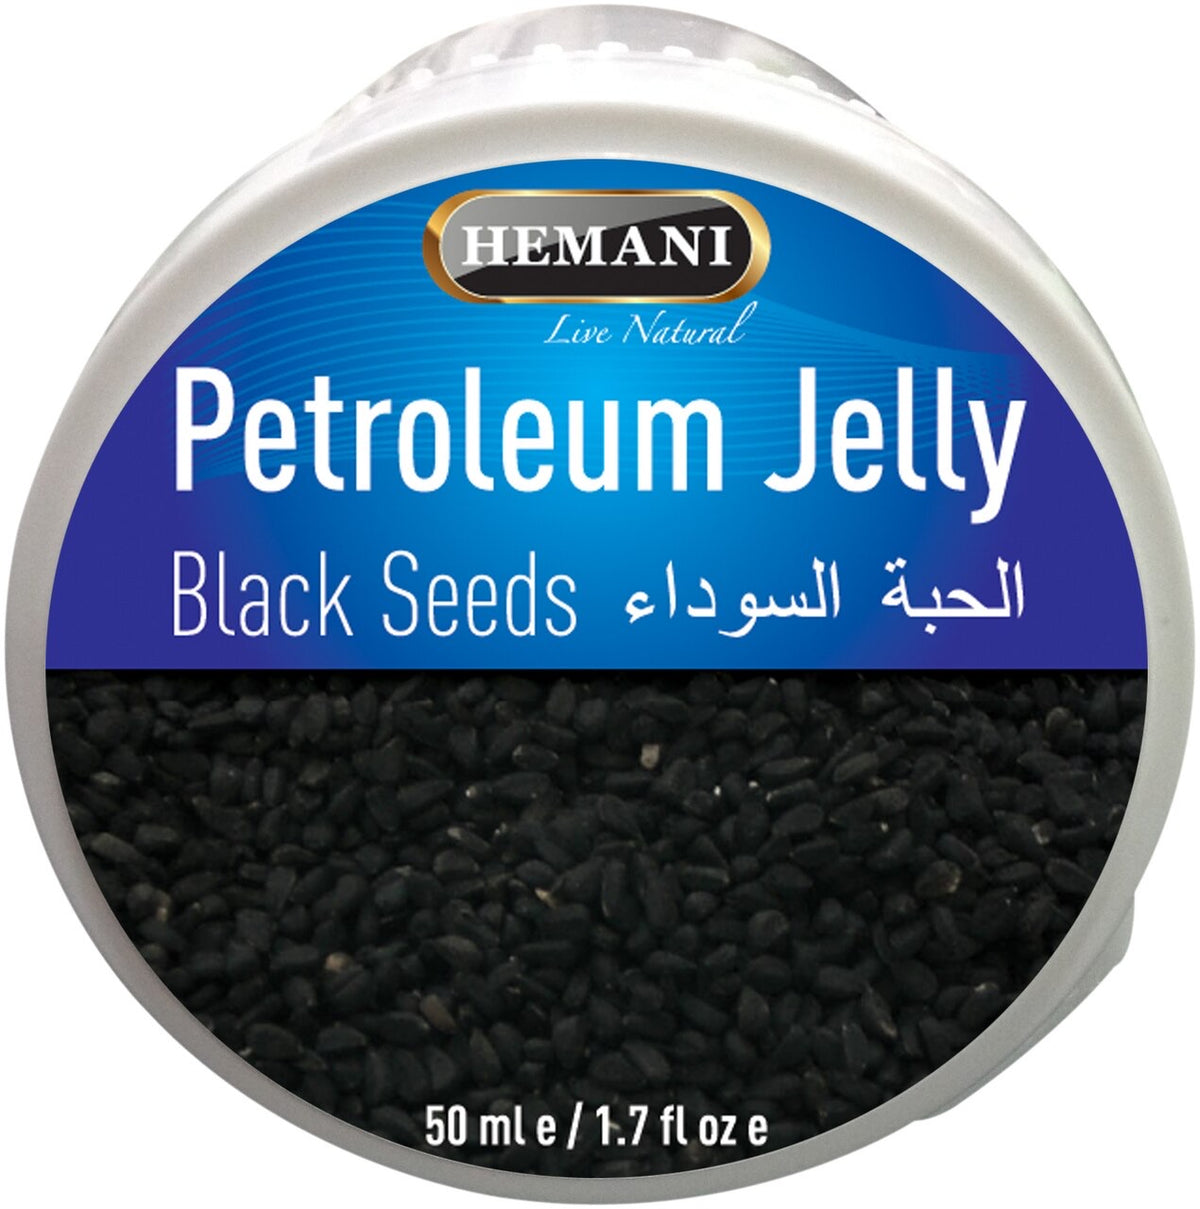 Hemani Black Seed Petroleum Jelly - jubbas.com